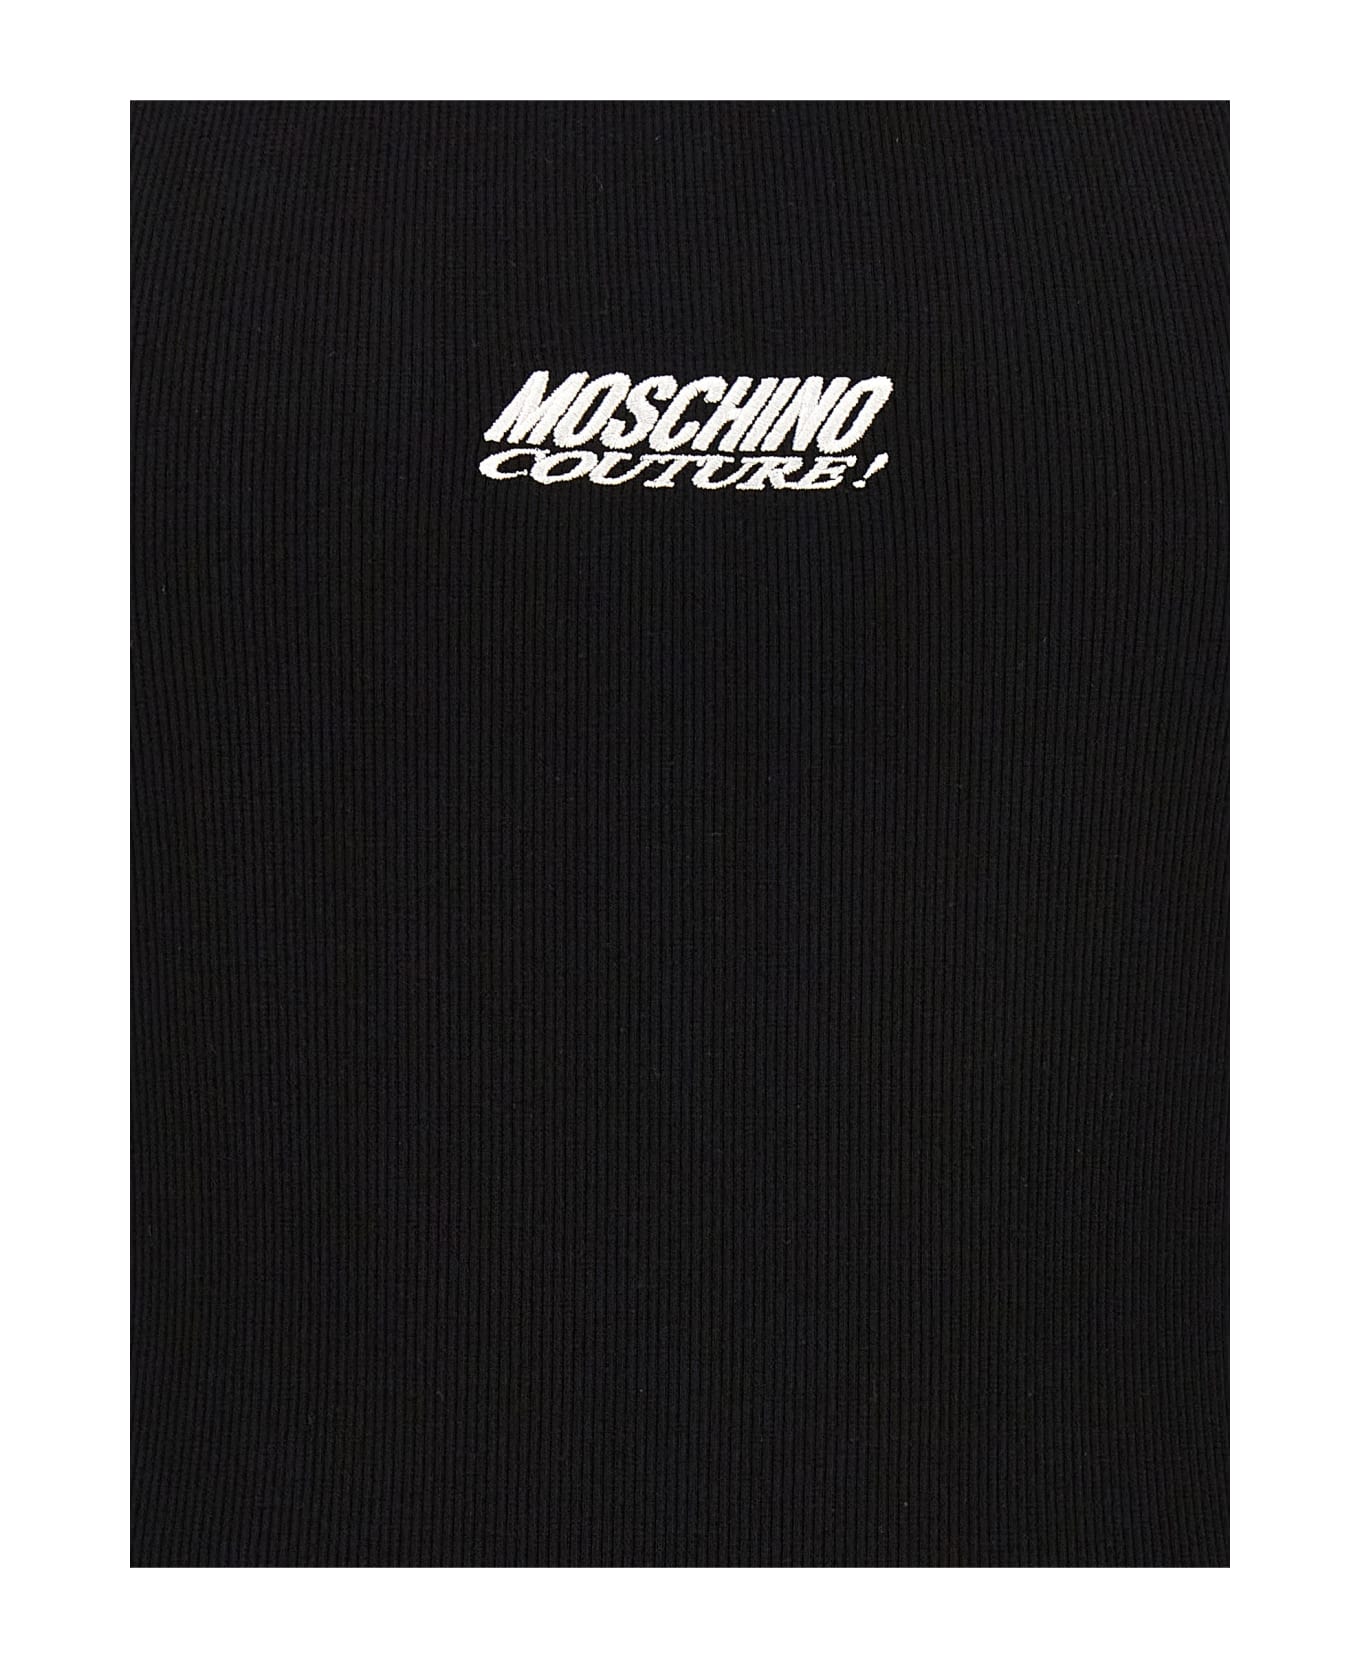 Moschino Logo Embroidery Tank Top - Black   タンクトップ